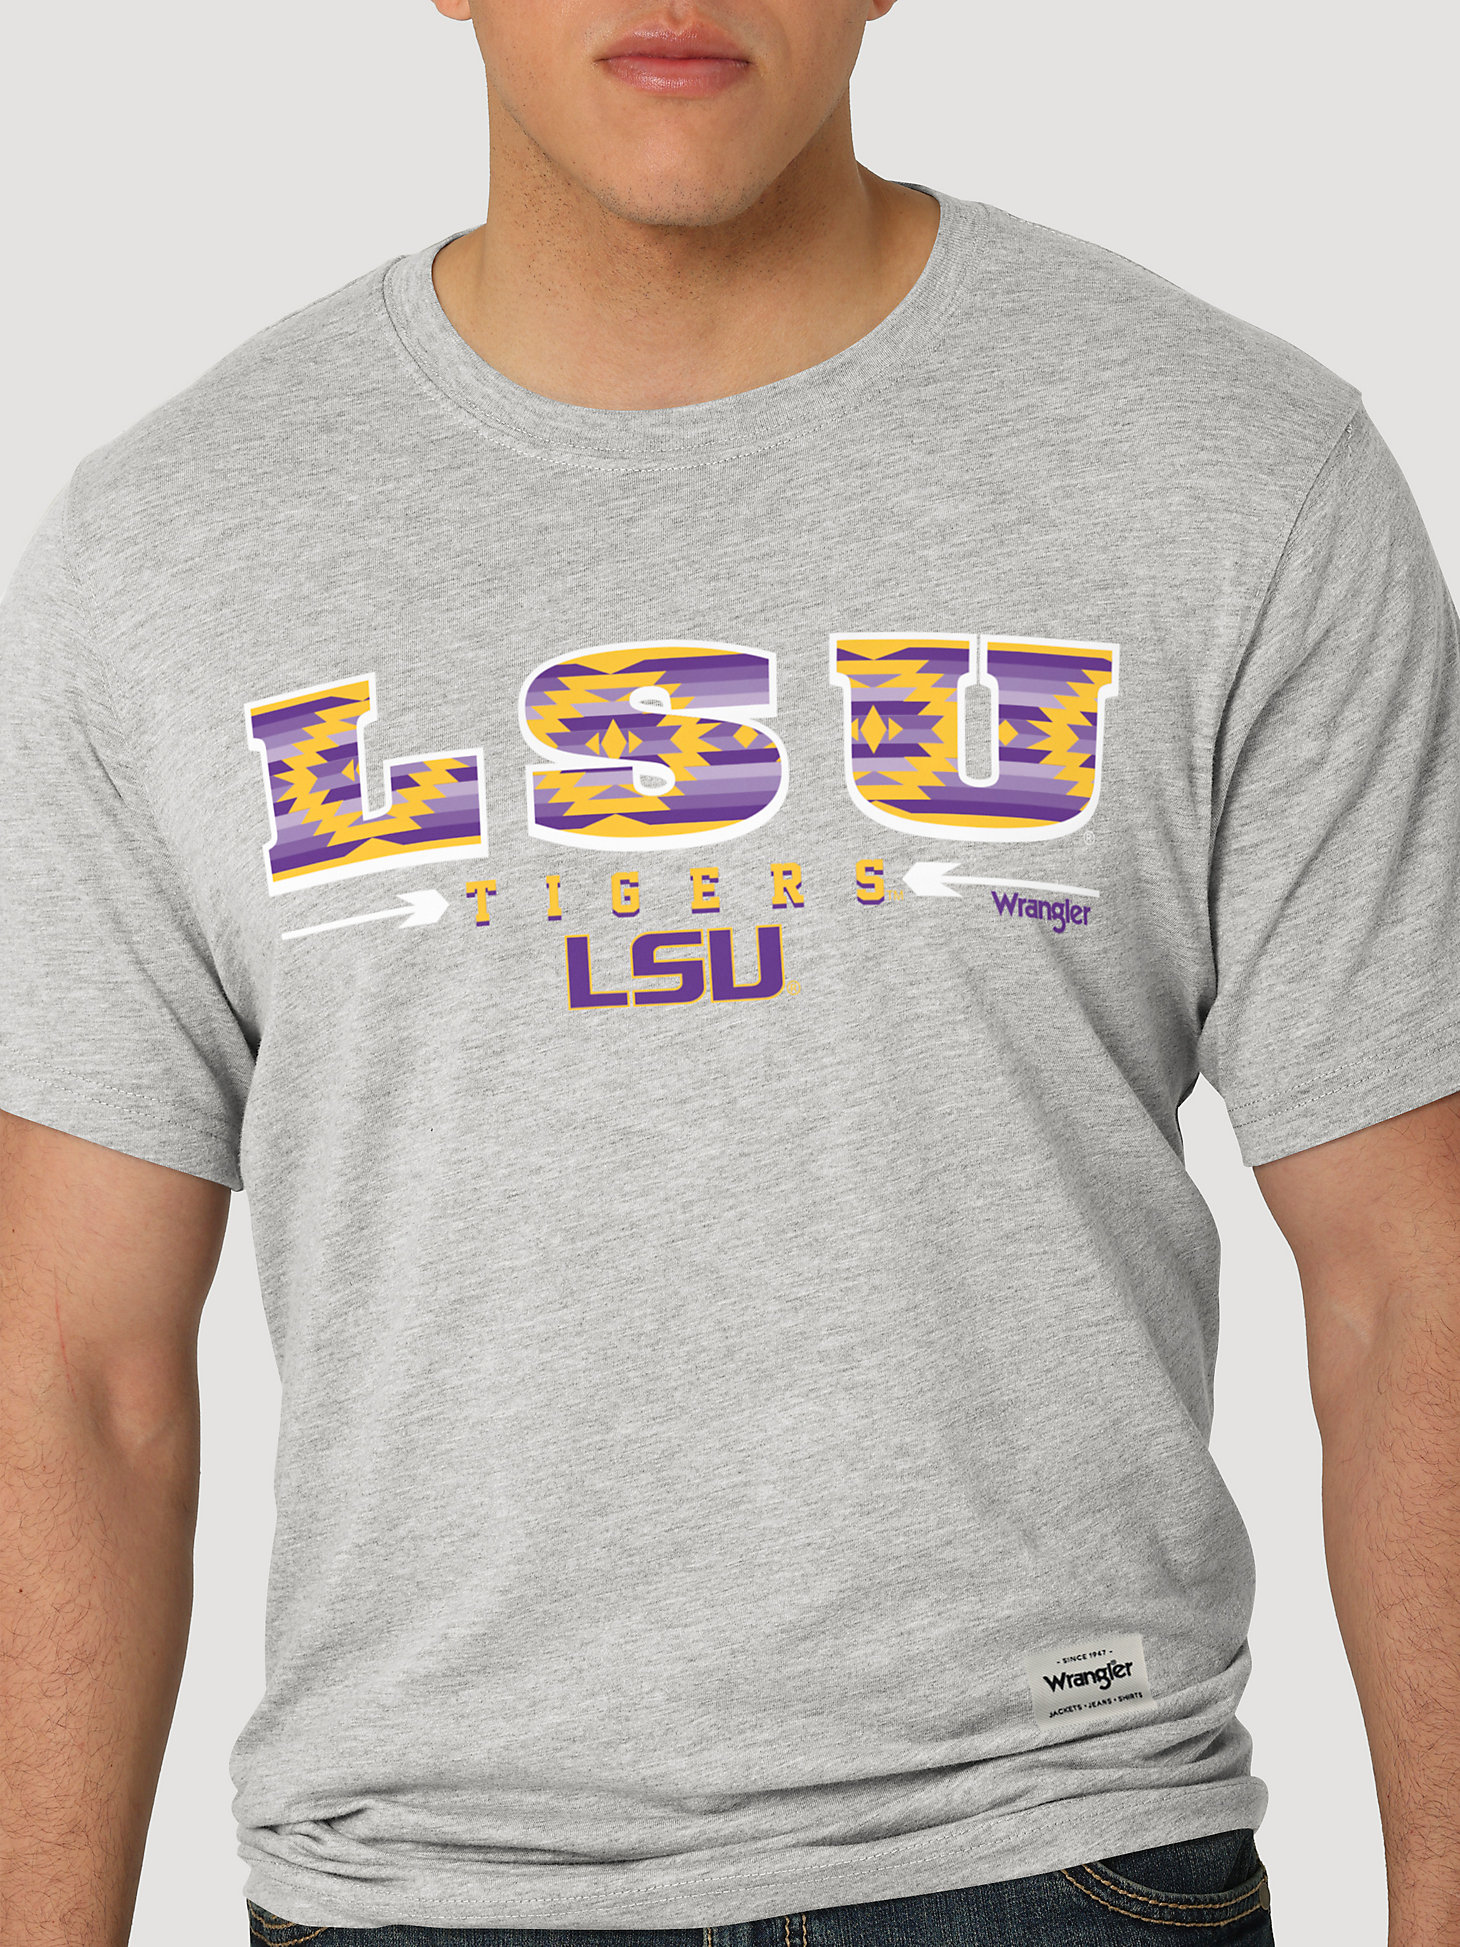 Wrangler Collegiate Sunset Printed Short Sleeve T-Shirt in Louisiana State University alternative view 1